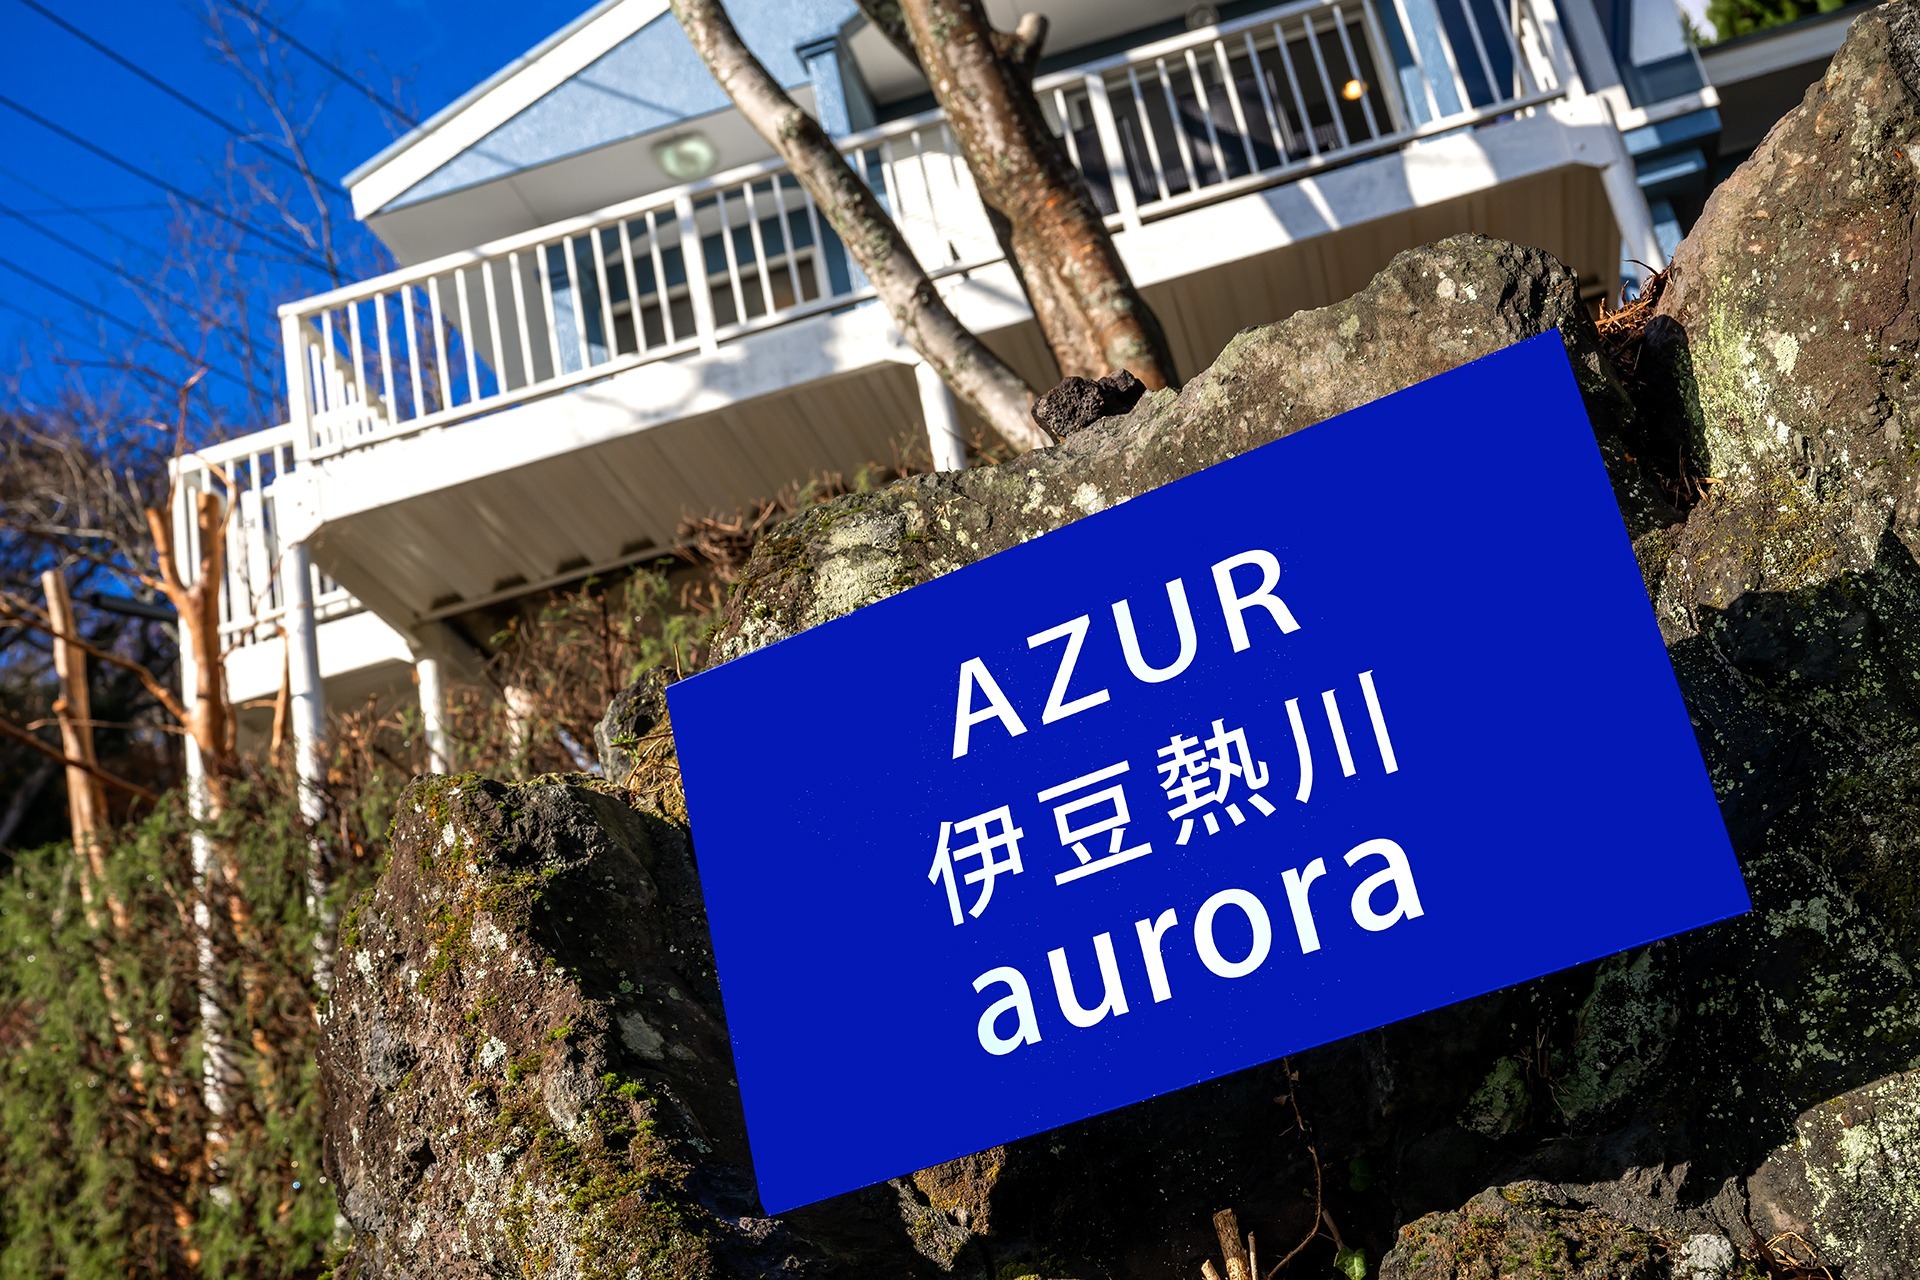 AZUR 伊豆熱川 aurora/天城山系よりムーンロードを臨む。温泉•サウナ•囲炉裏•B B Q